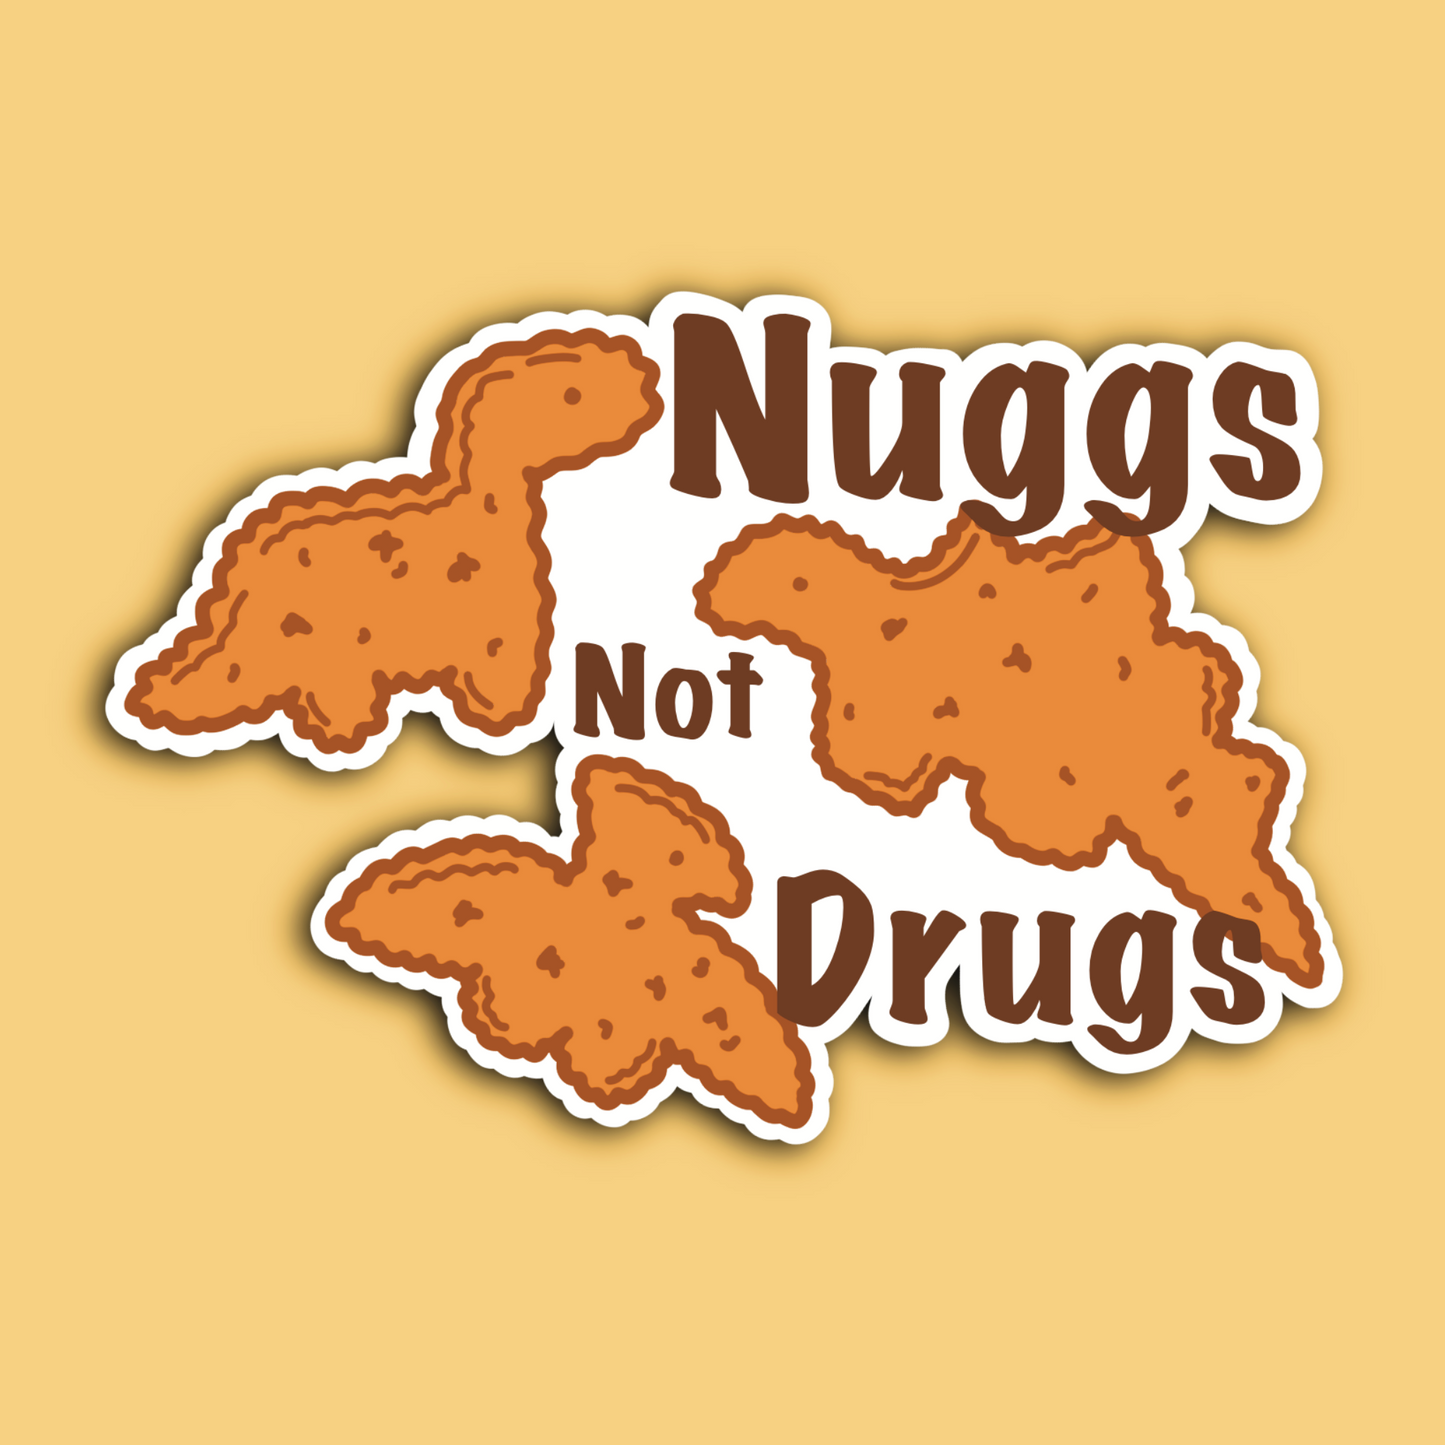 Nuggs Not Drugs Waterproof Sticker